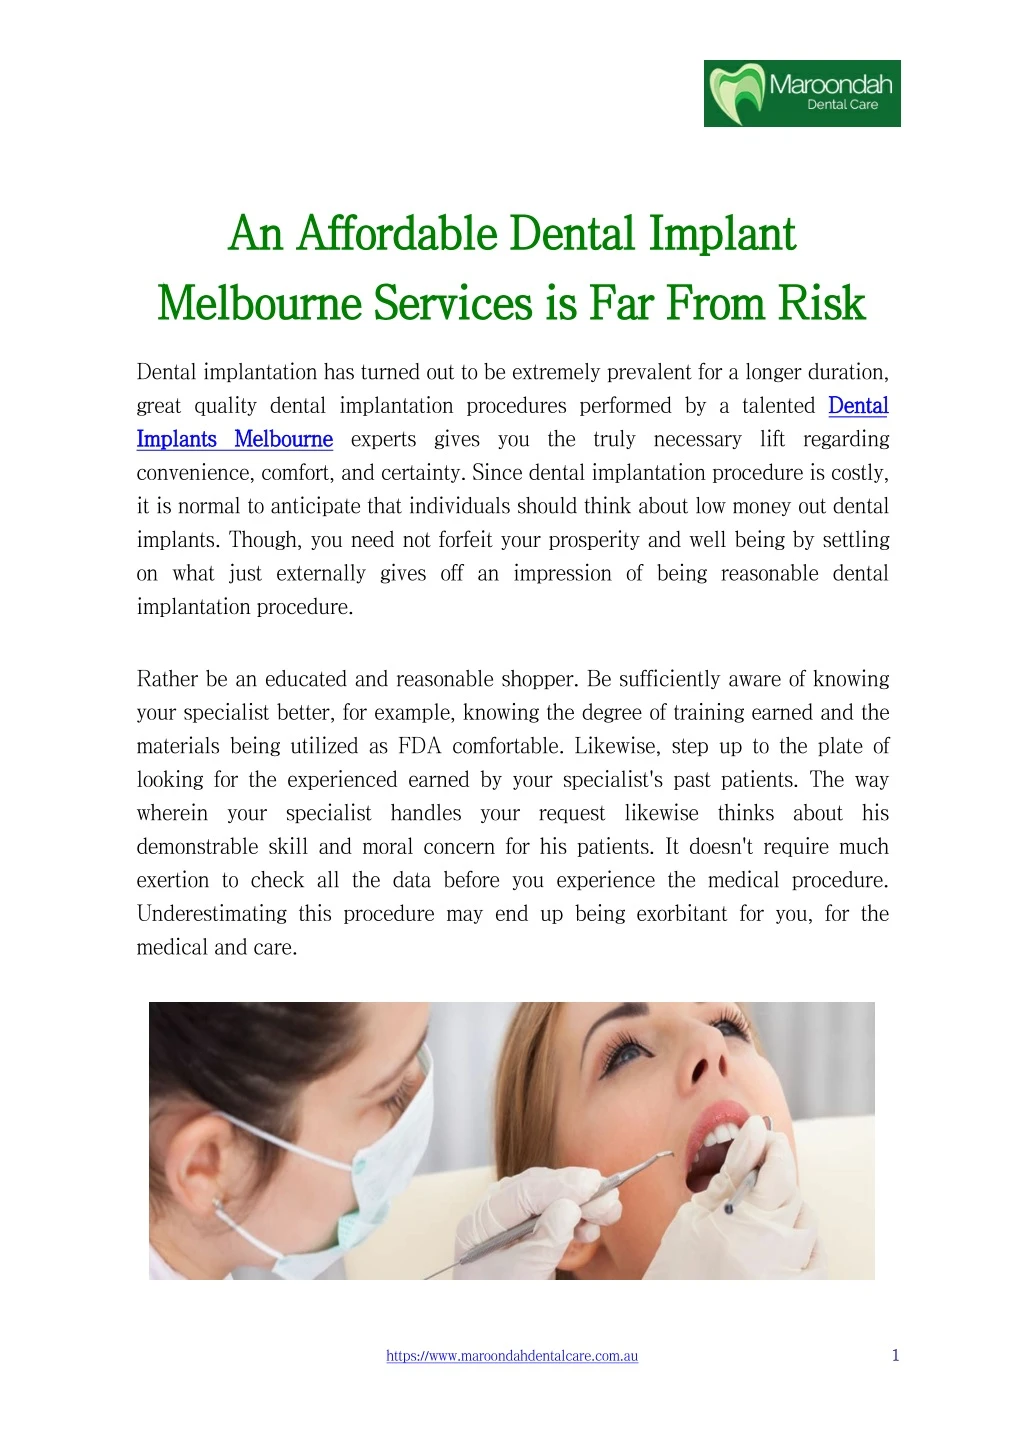 an an a affordable ffordable d dental melbourne